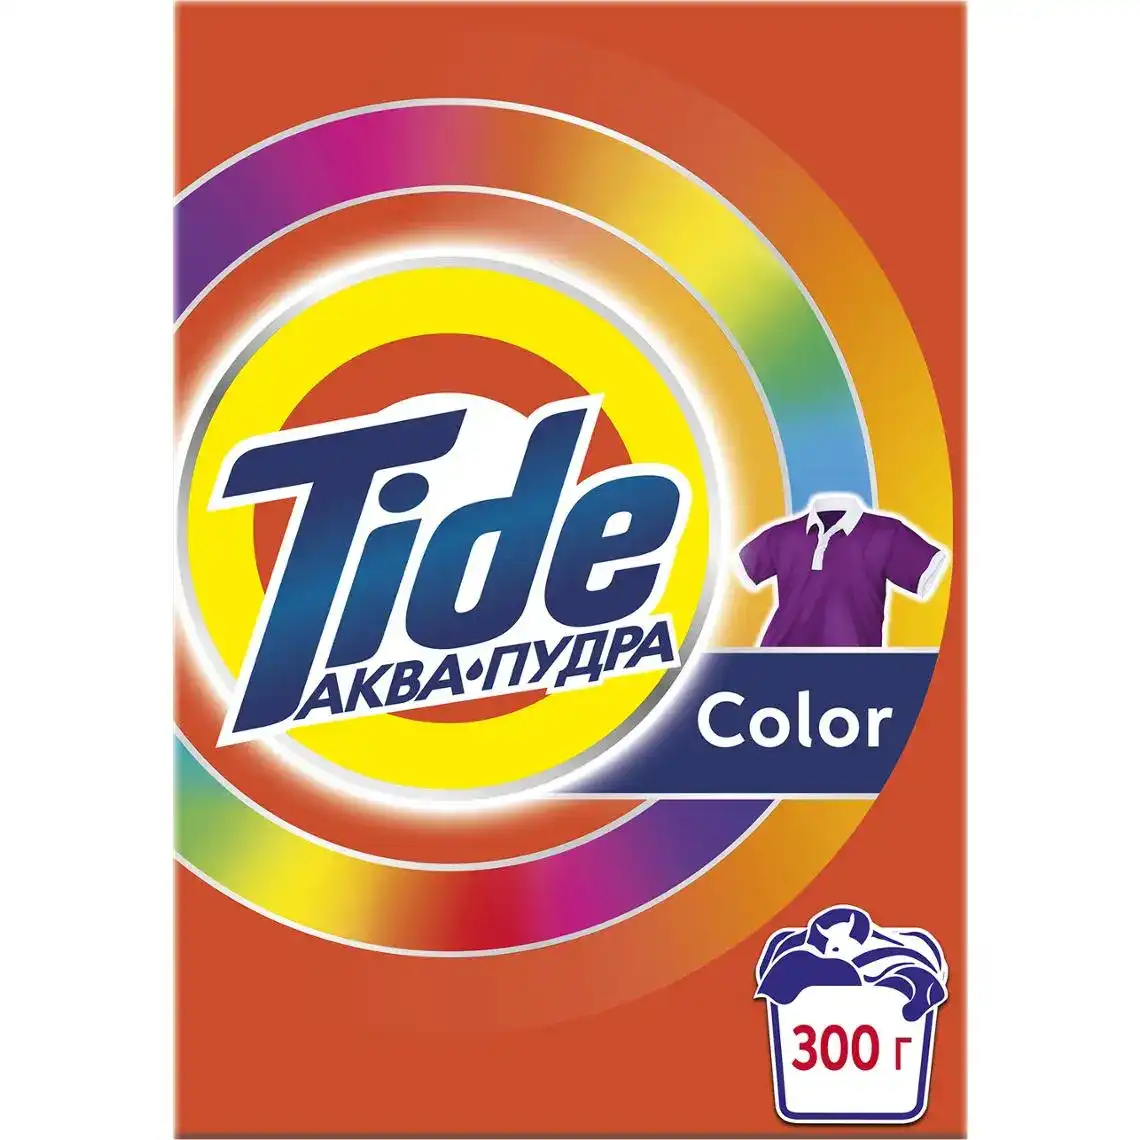 Пральний порошок Tide Аква-пудра Color автомат 300 г